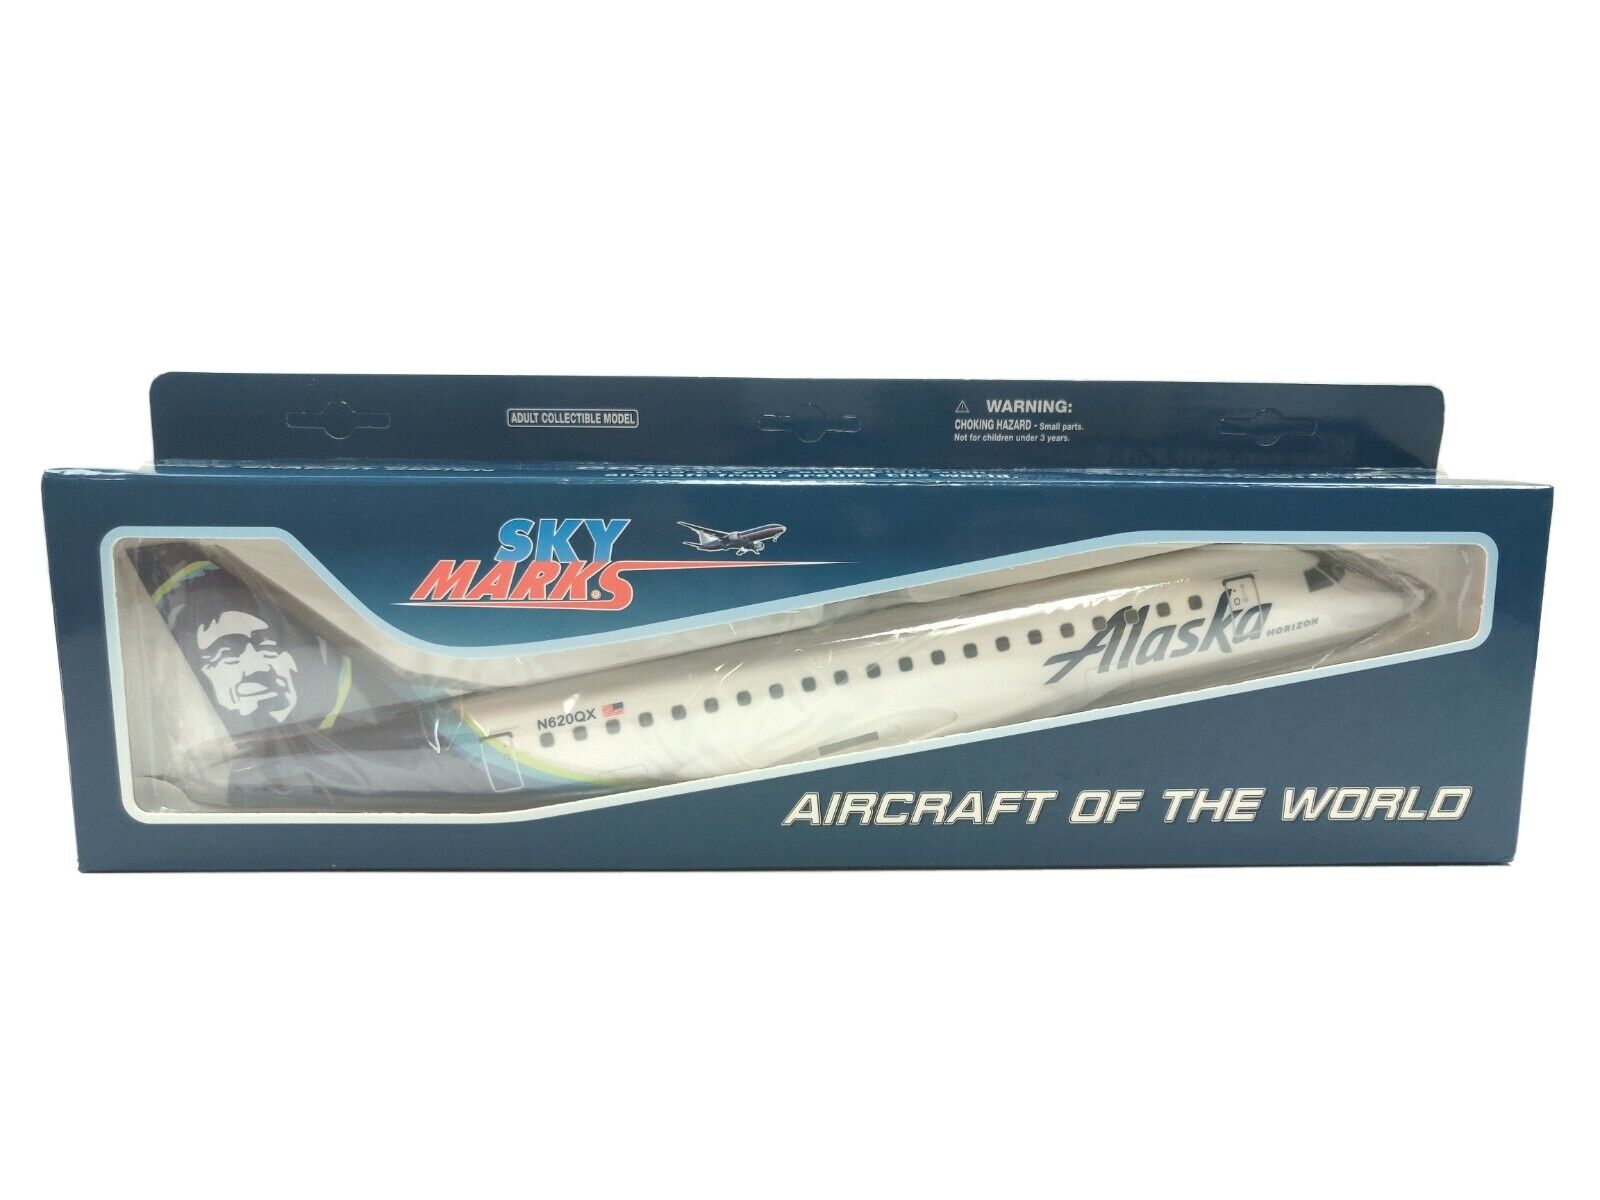 Sky Marks Aircraft of the World Alaska Horizon N620QX Airplane Daron Worldwide 